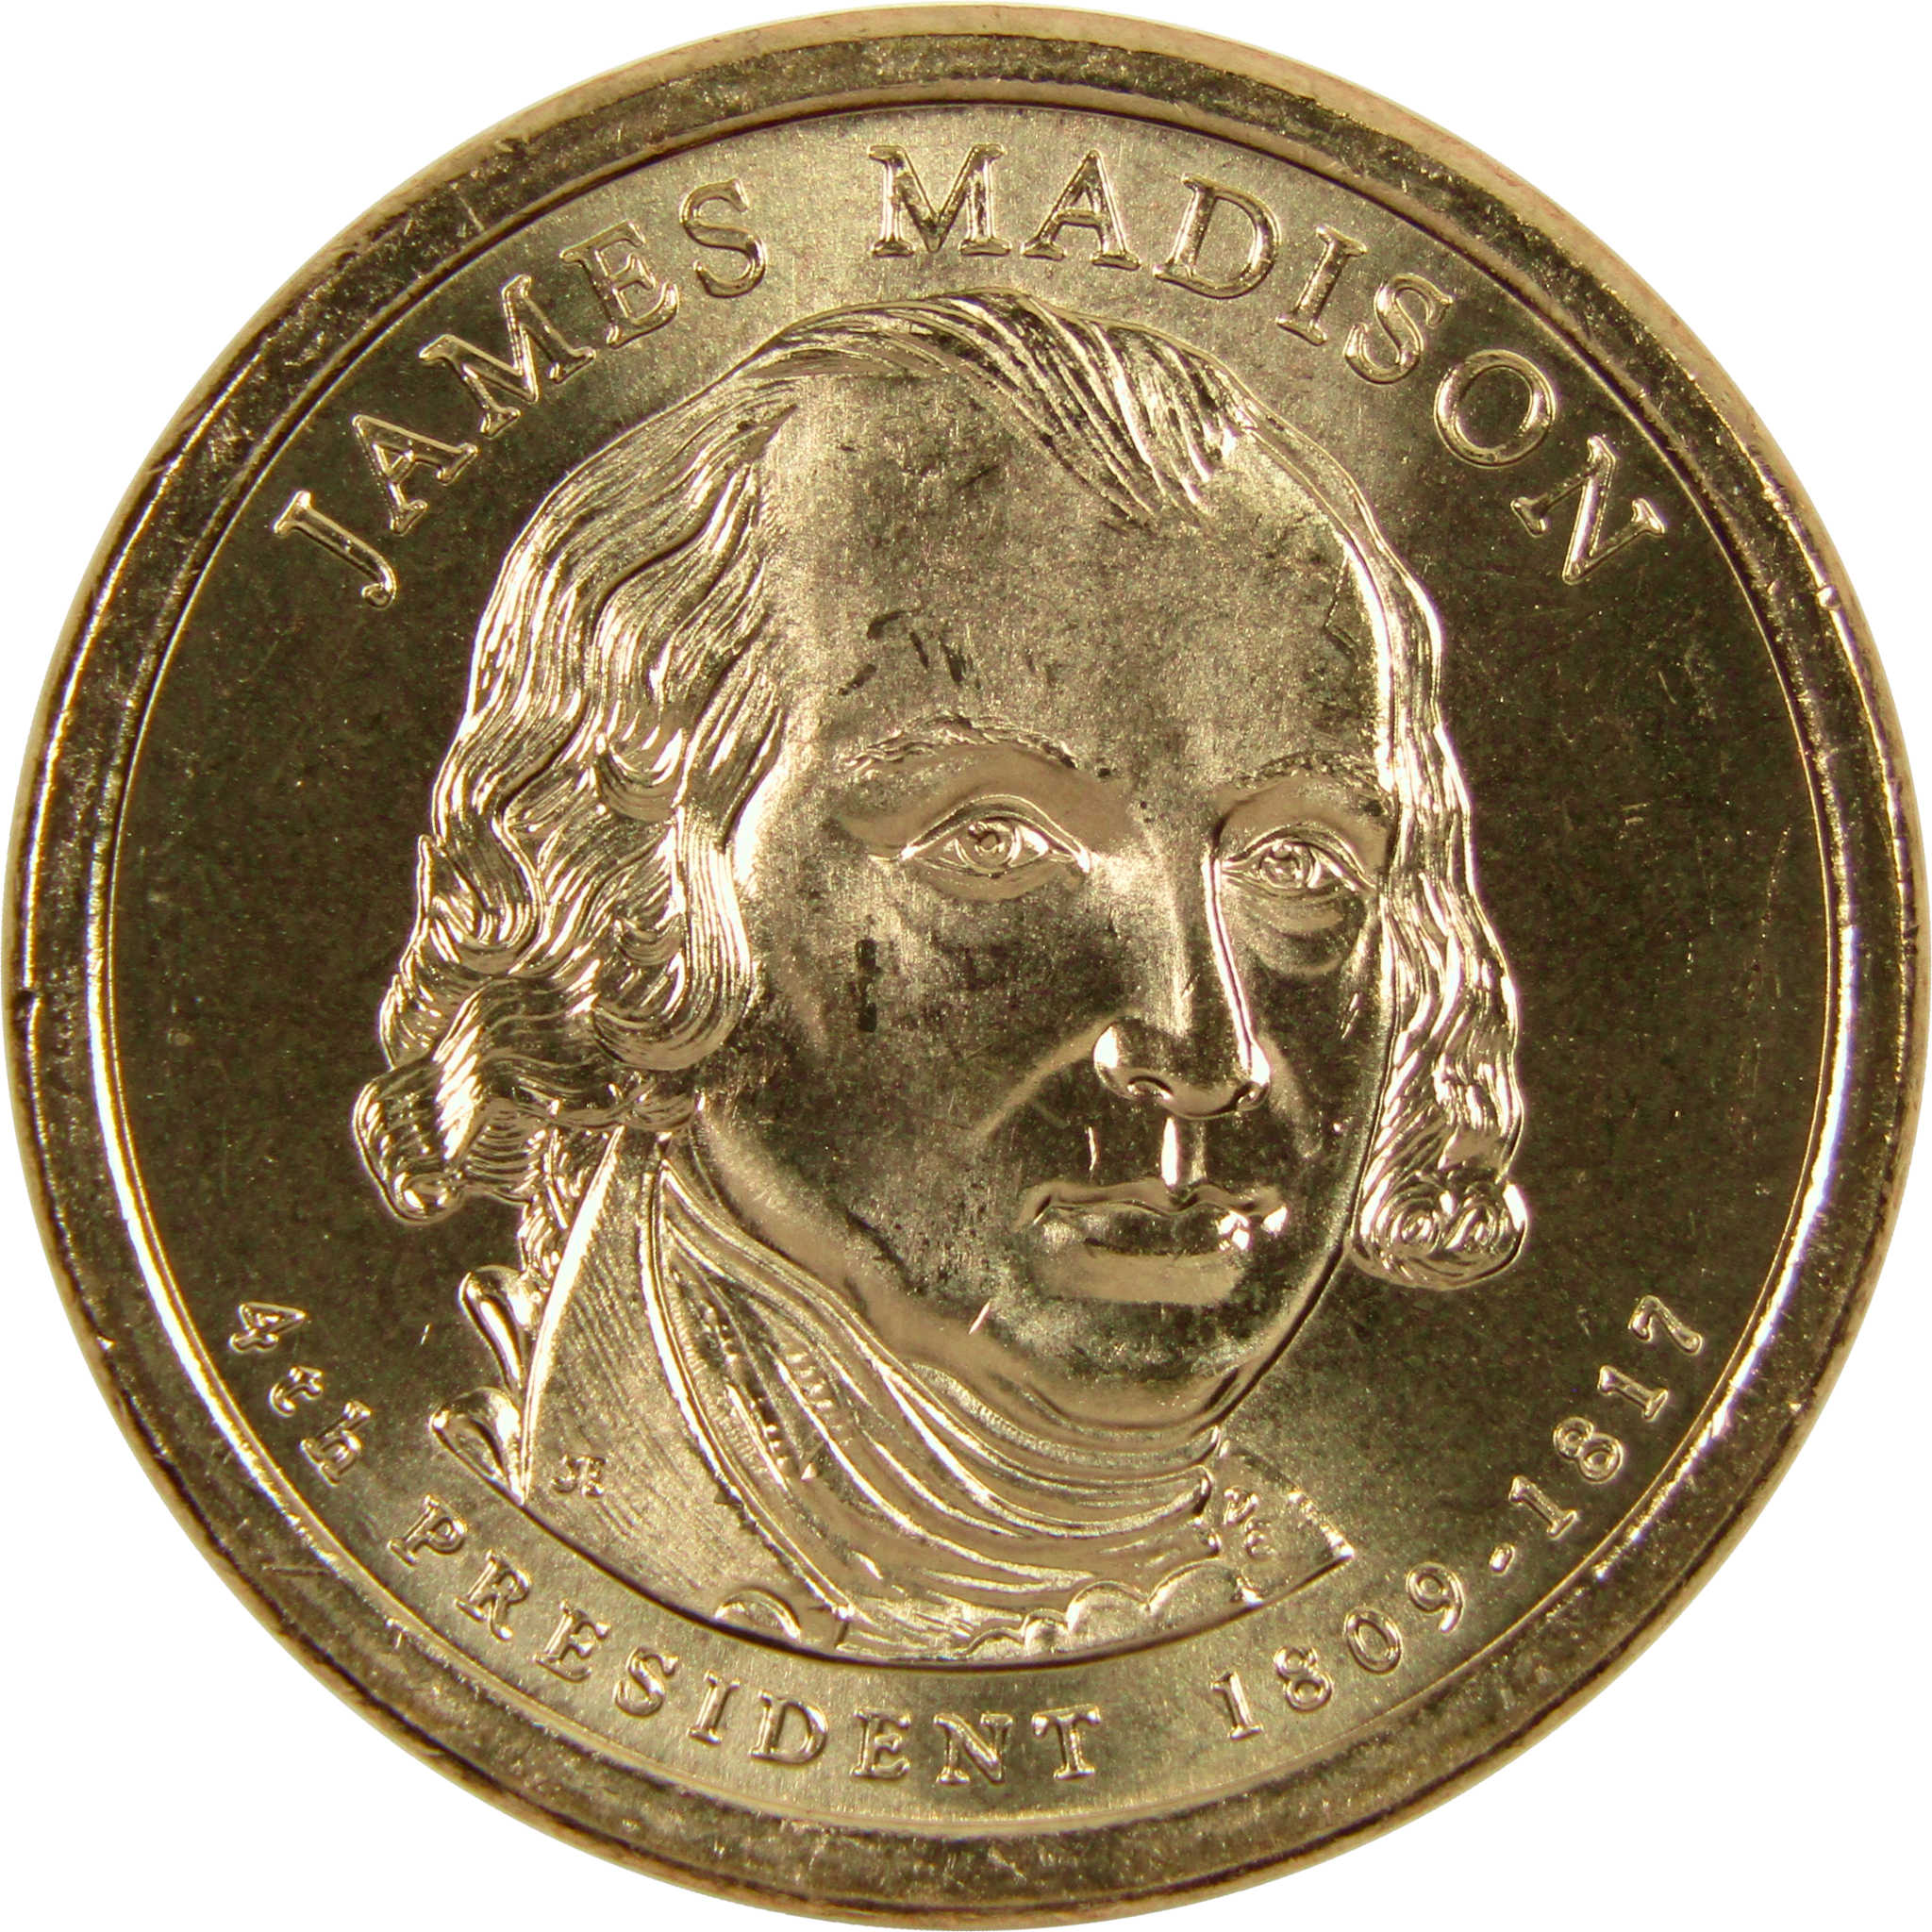 2007 P James Madison Presidential Dollar BU Uncirculated $1 Coin